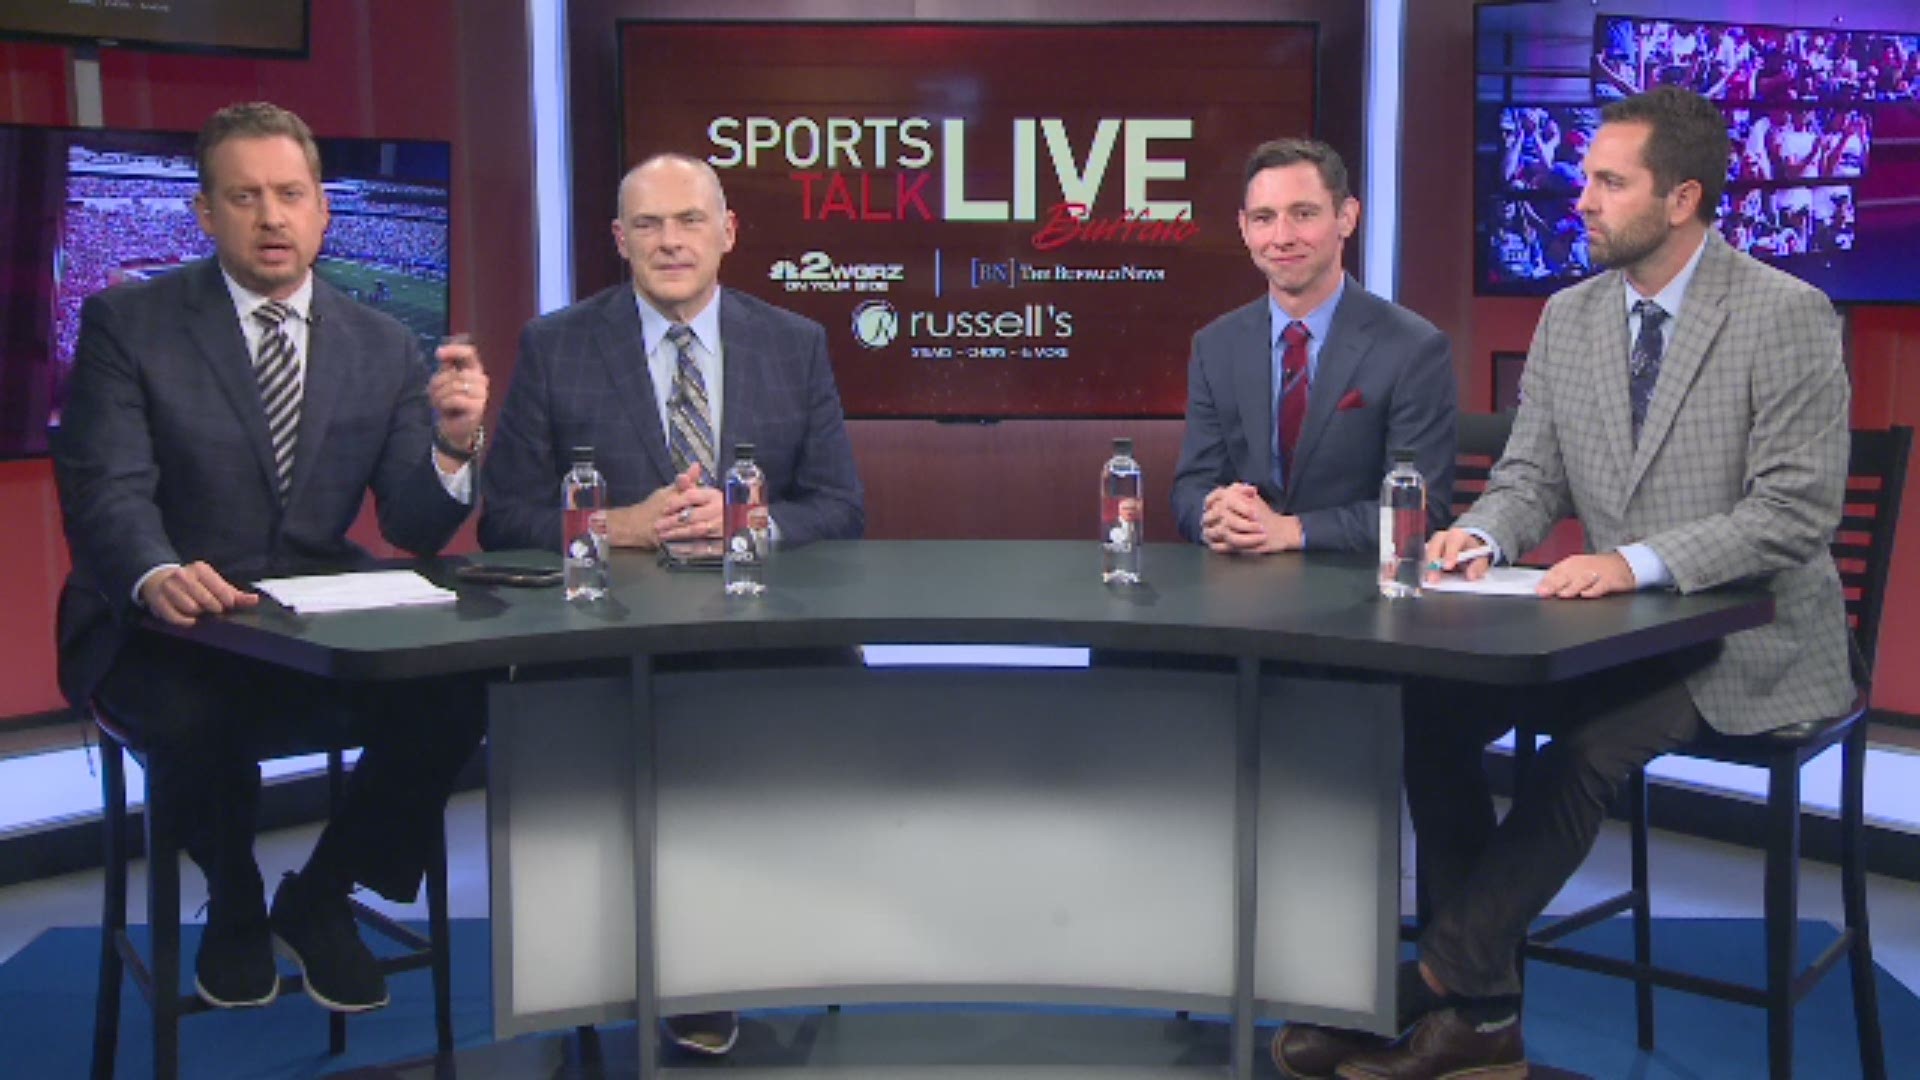 Sports Talk Buffalo Live airs every Monday night at 7:30, live on WGRZ-TV